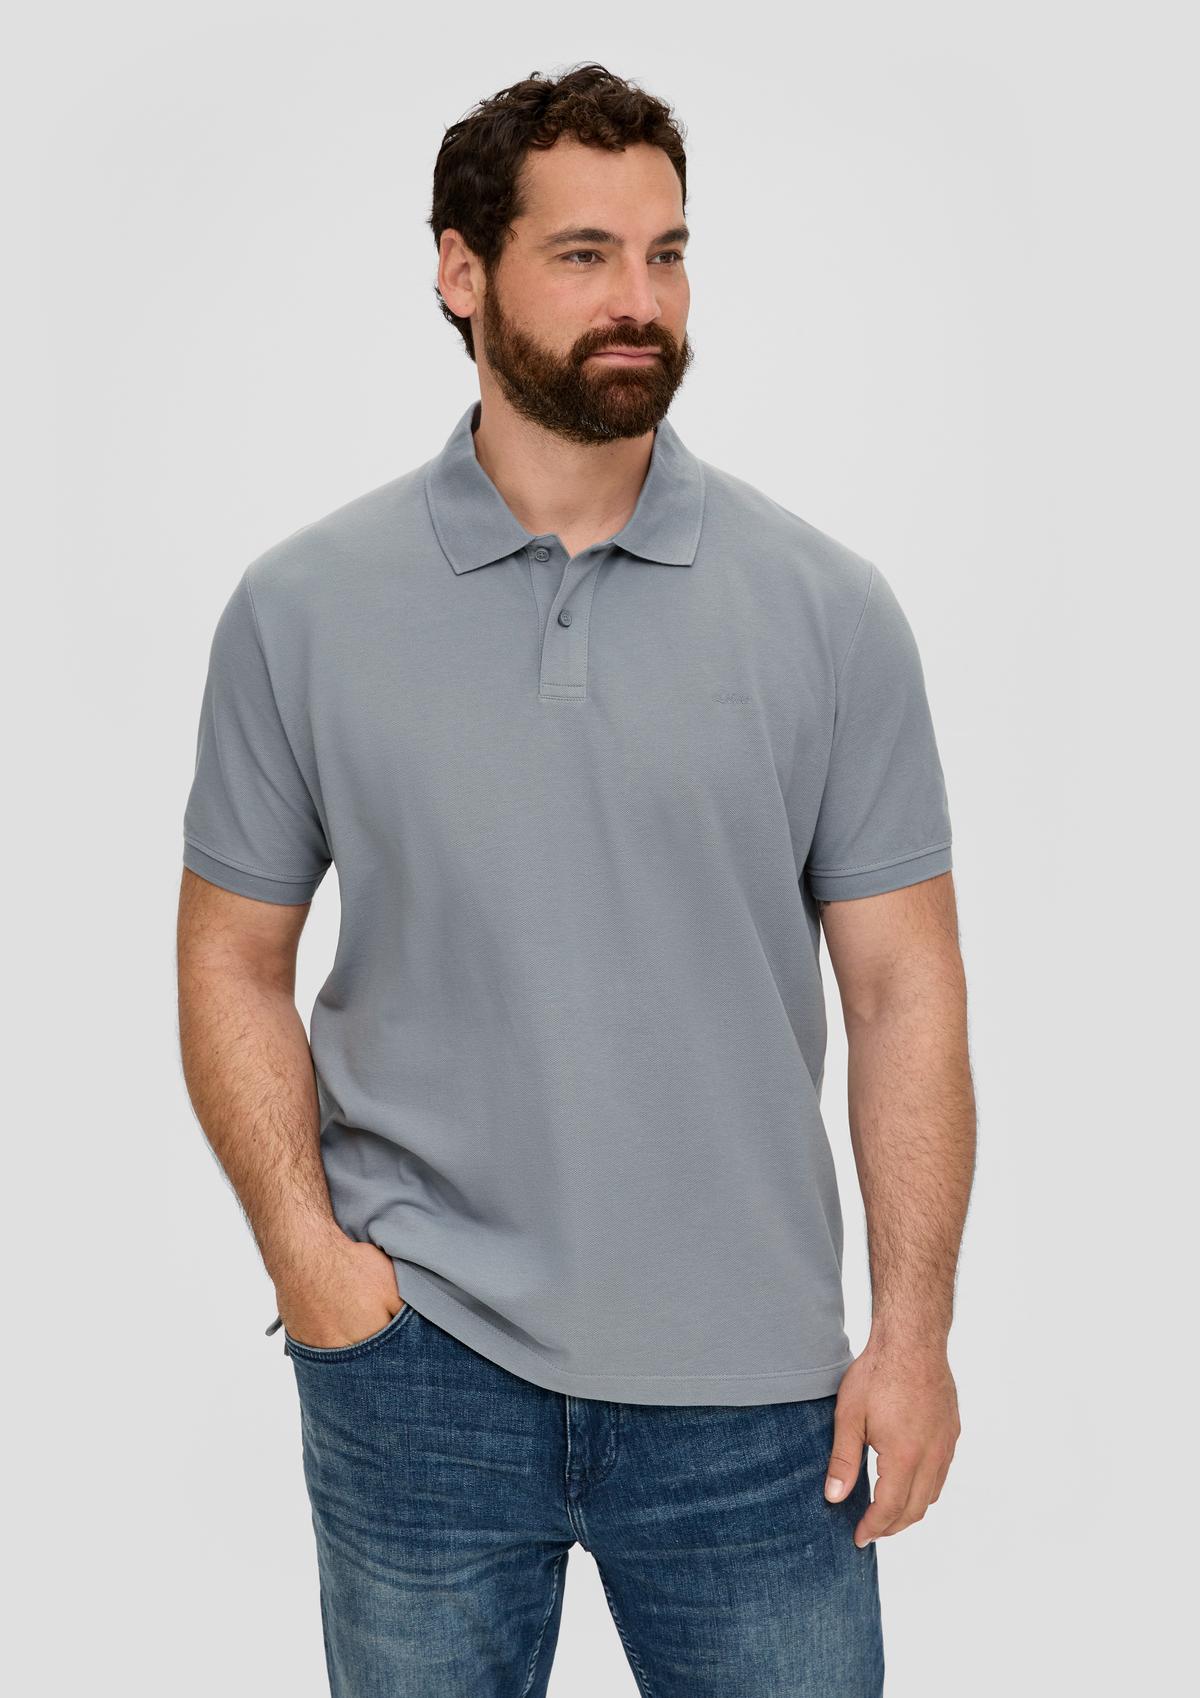 a with print shirt minimalist Polo navy -